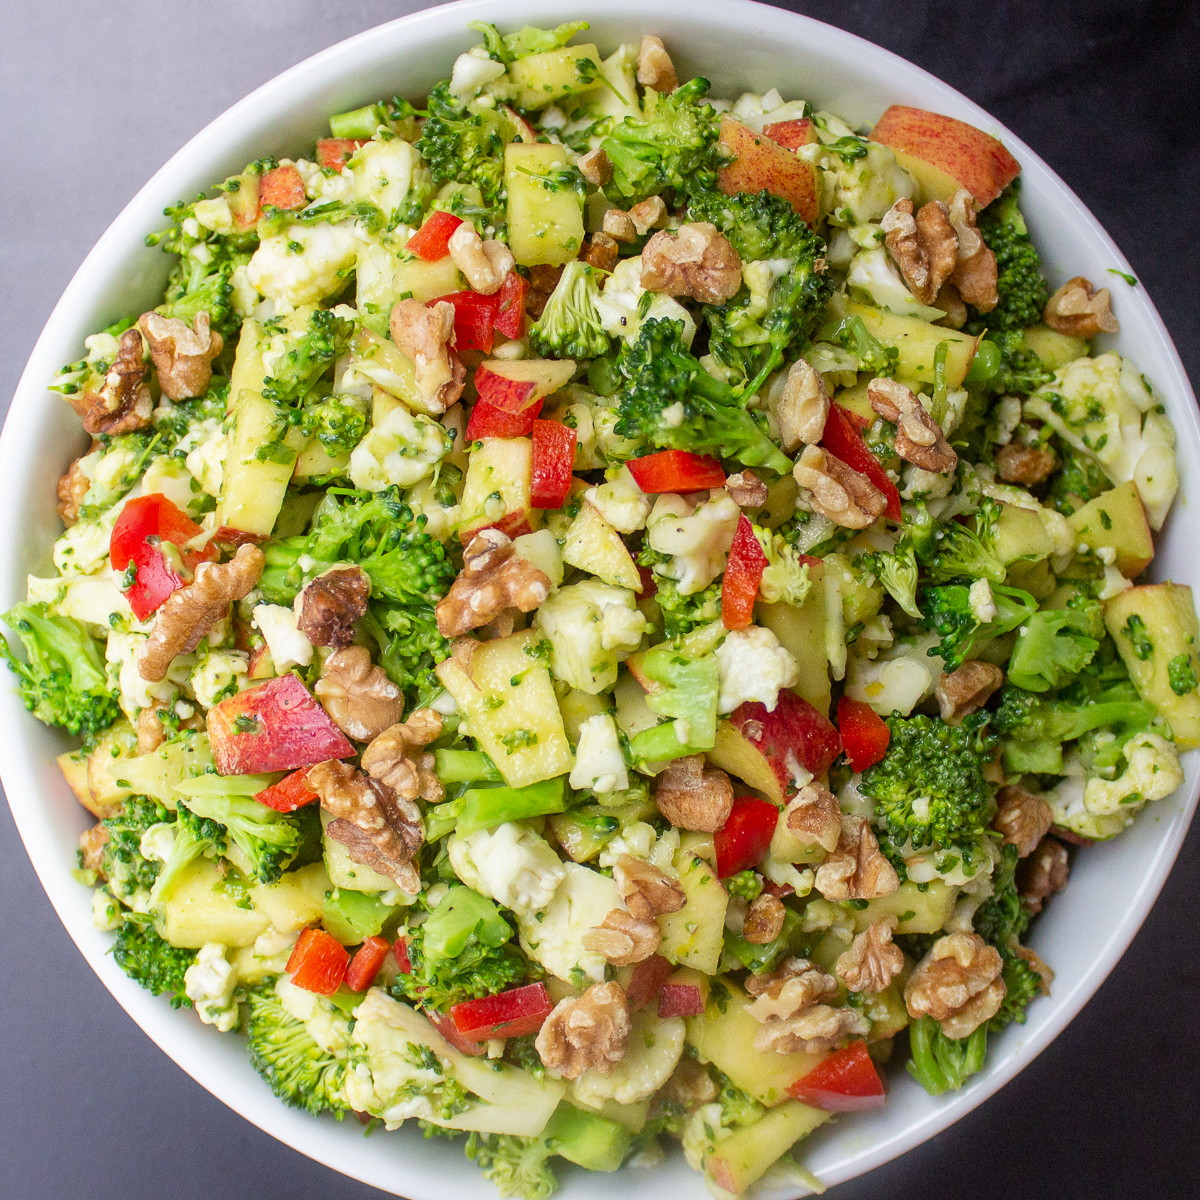 Broccoli and Cauliflower Salad with Avocado Dressing